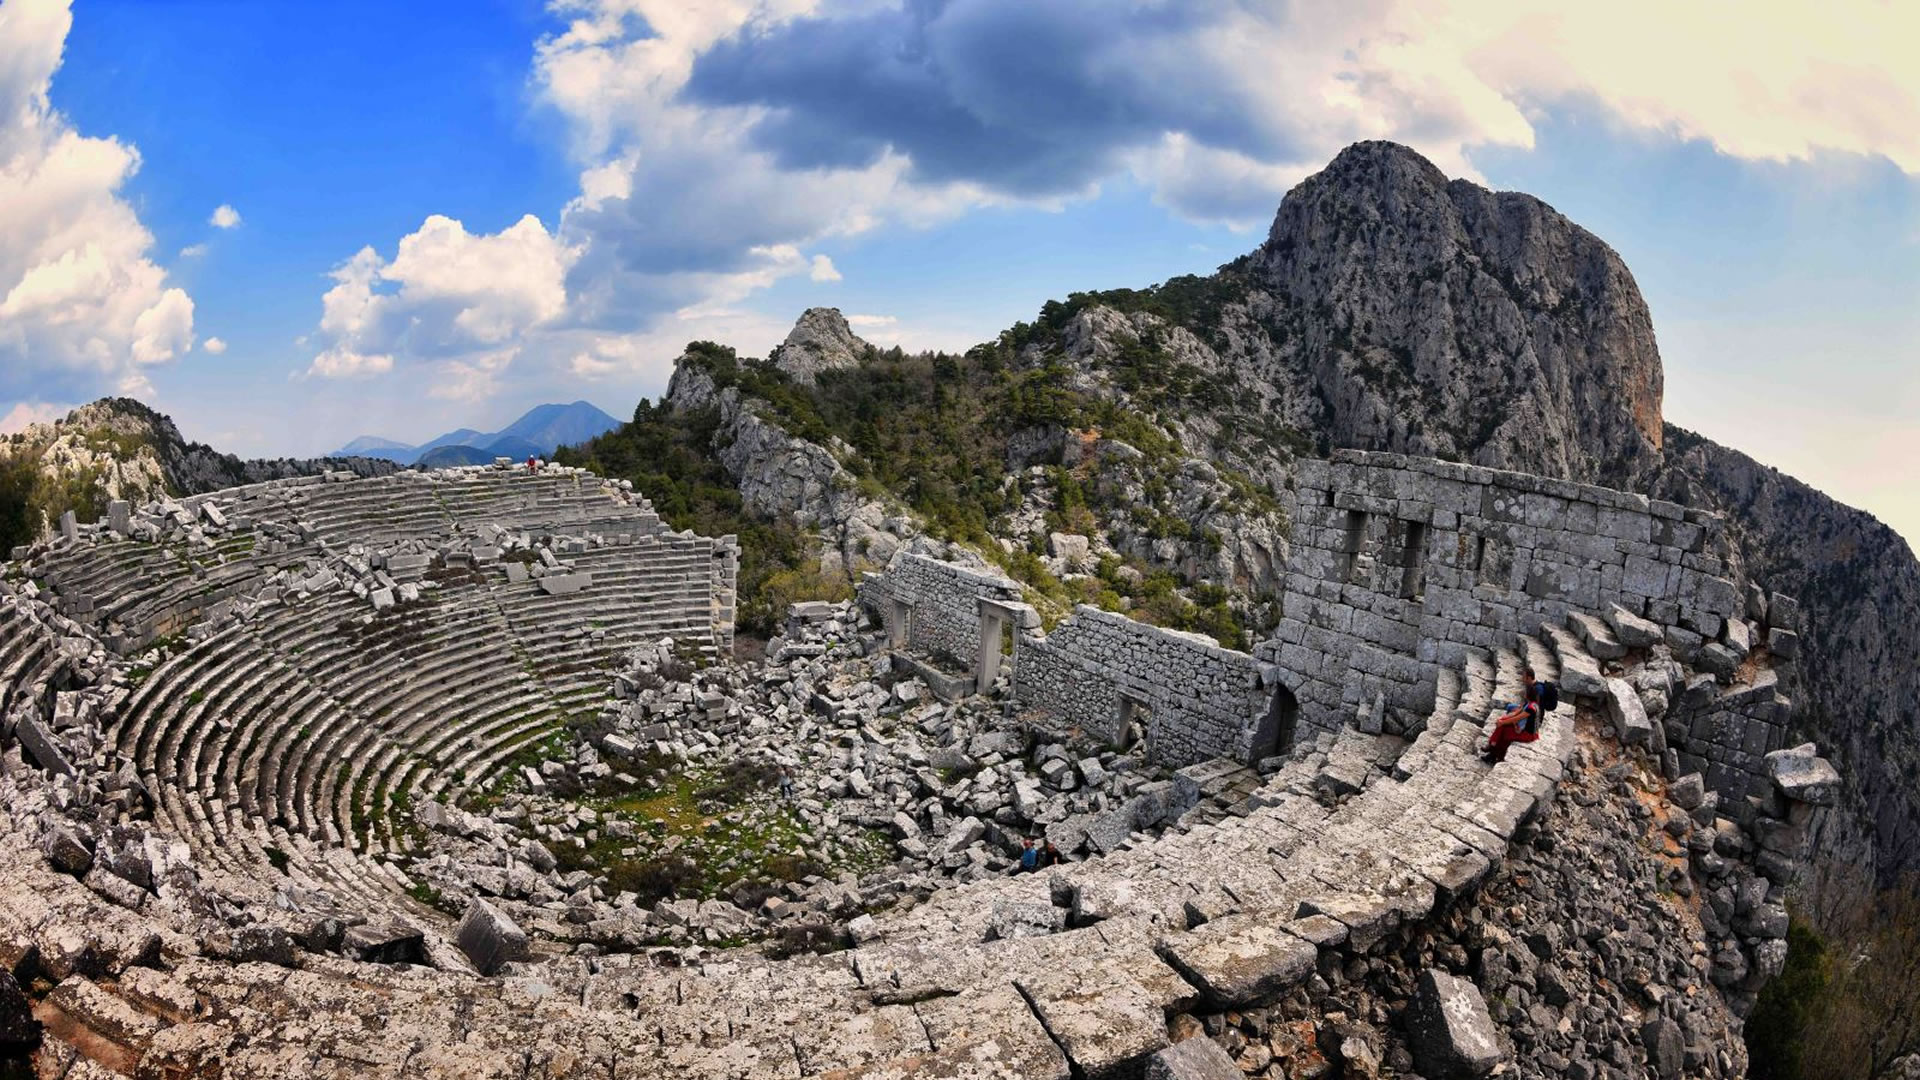 Termessos A Citadel Above the Mountains